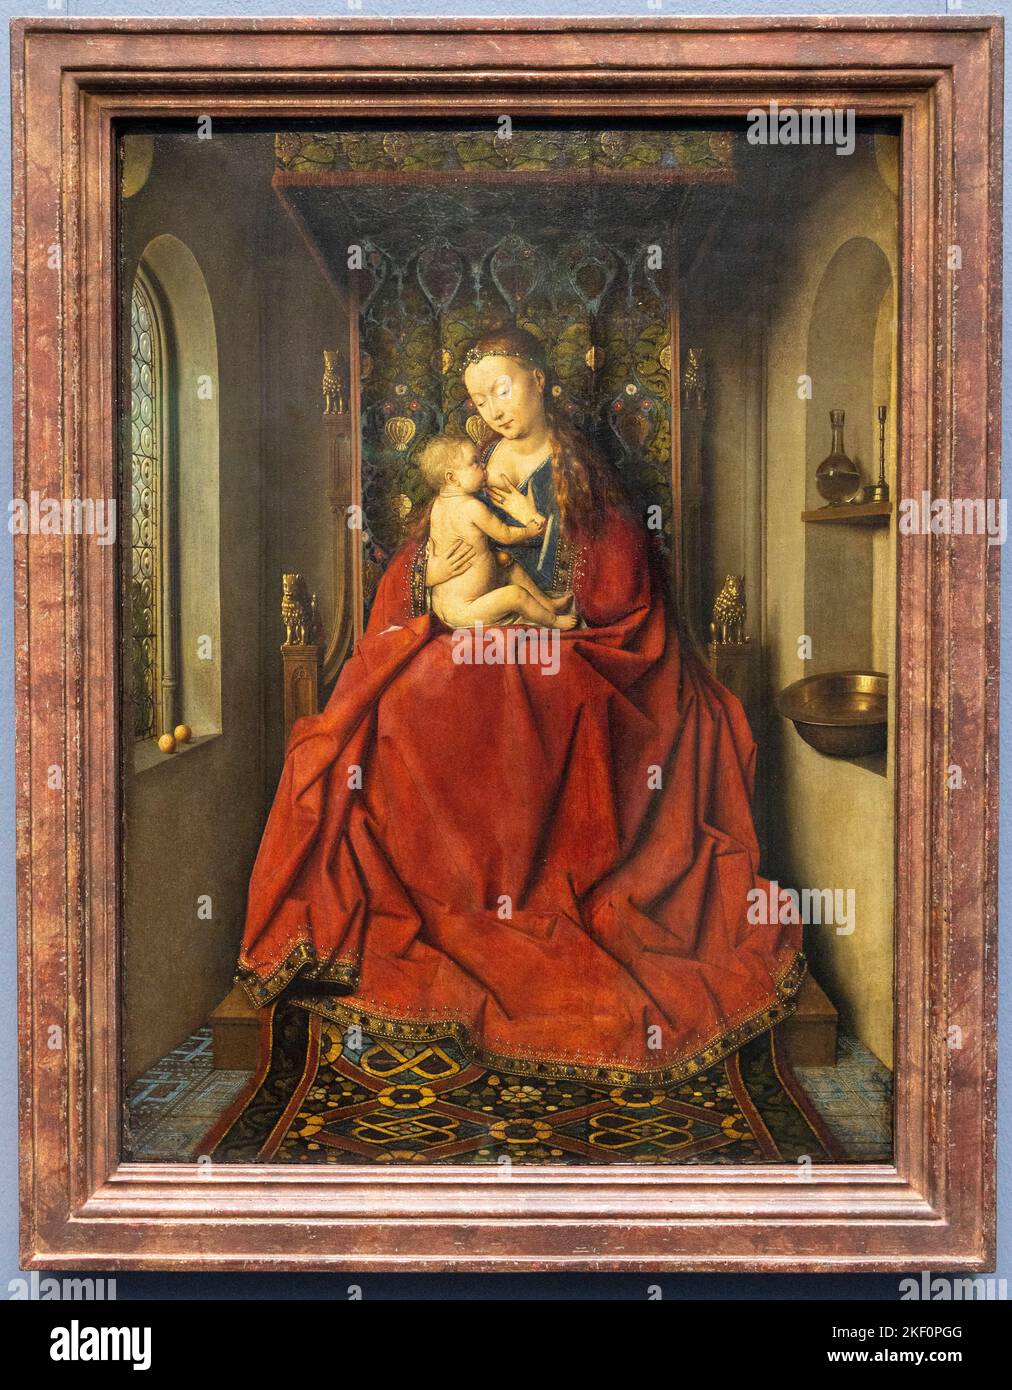 The Lucca Madonna, oil painting by Jan van Eyck, c. 1437, Städel Museum, Frankfurt Stock Photo